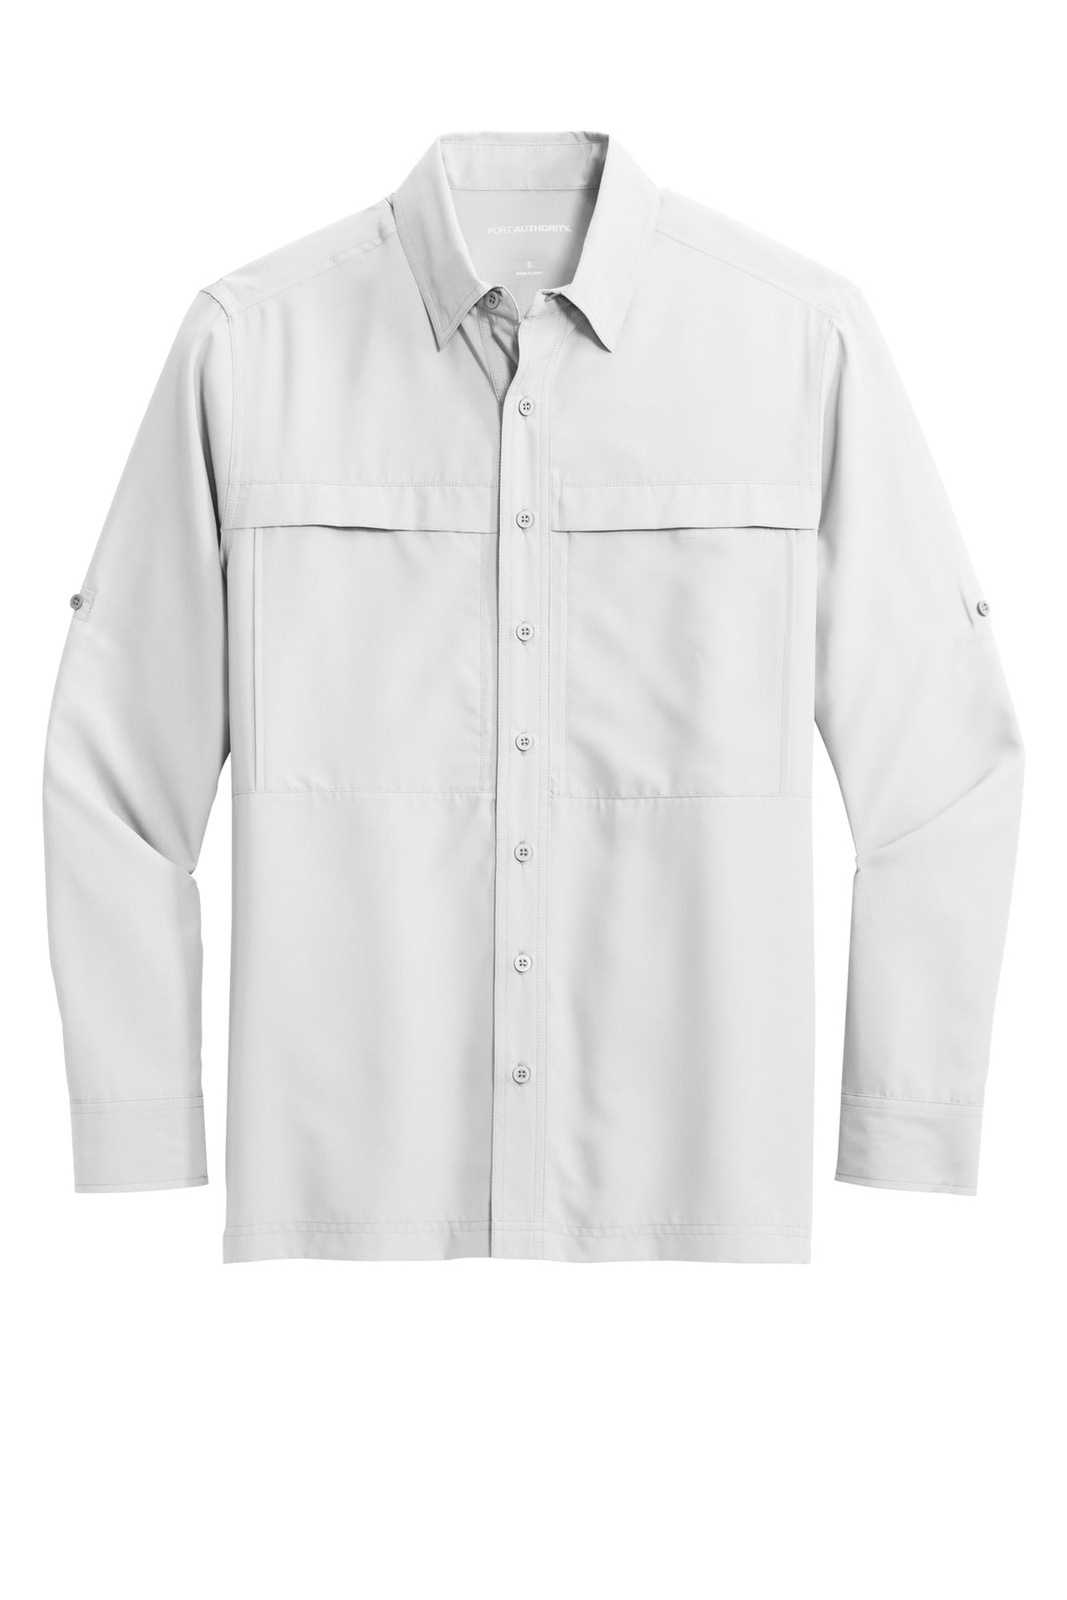 Port Authority W960 Long Sleeve UV Daybreak Shirt - White - HIT a Double - 1